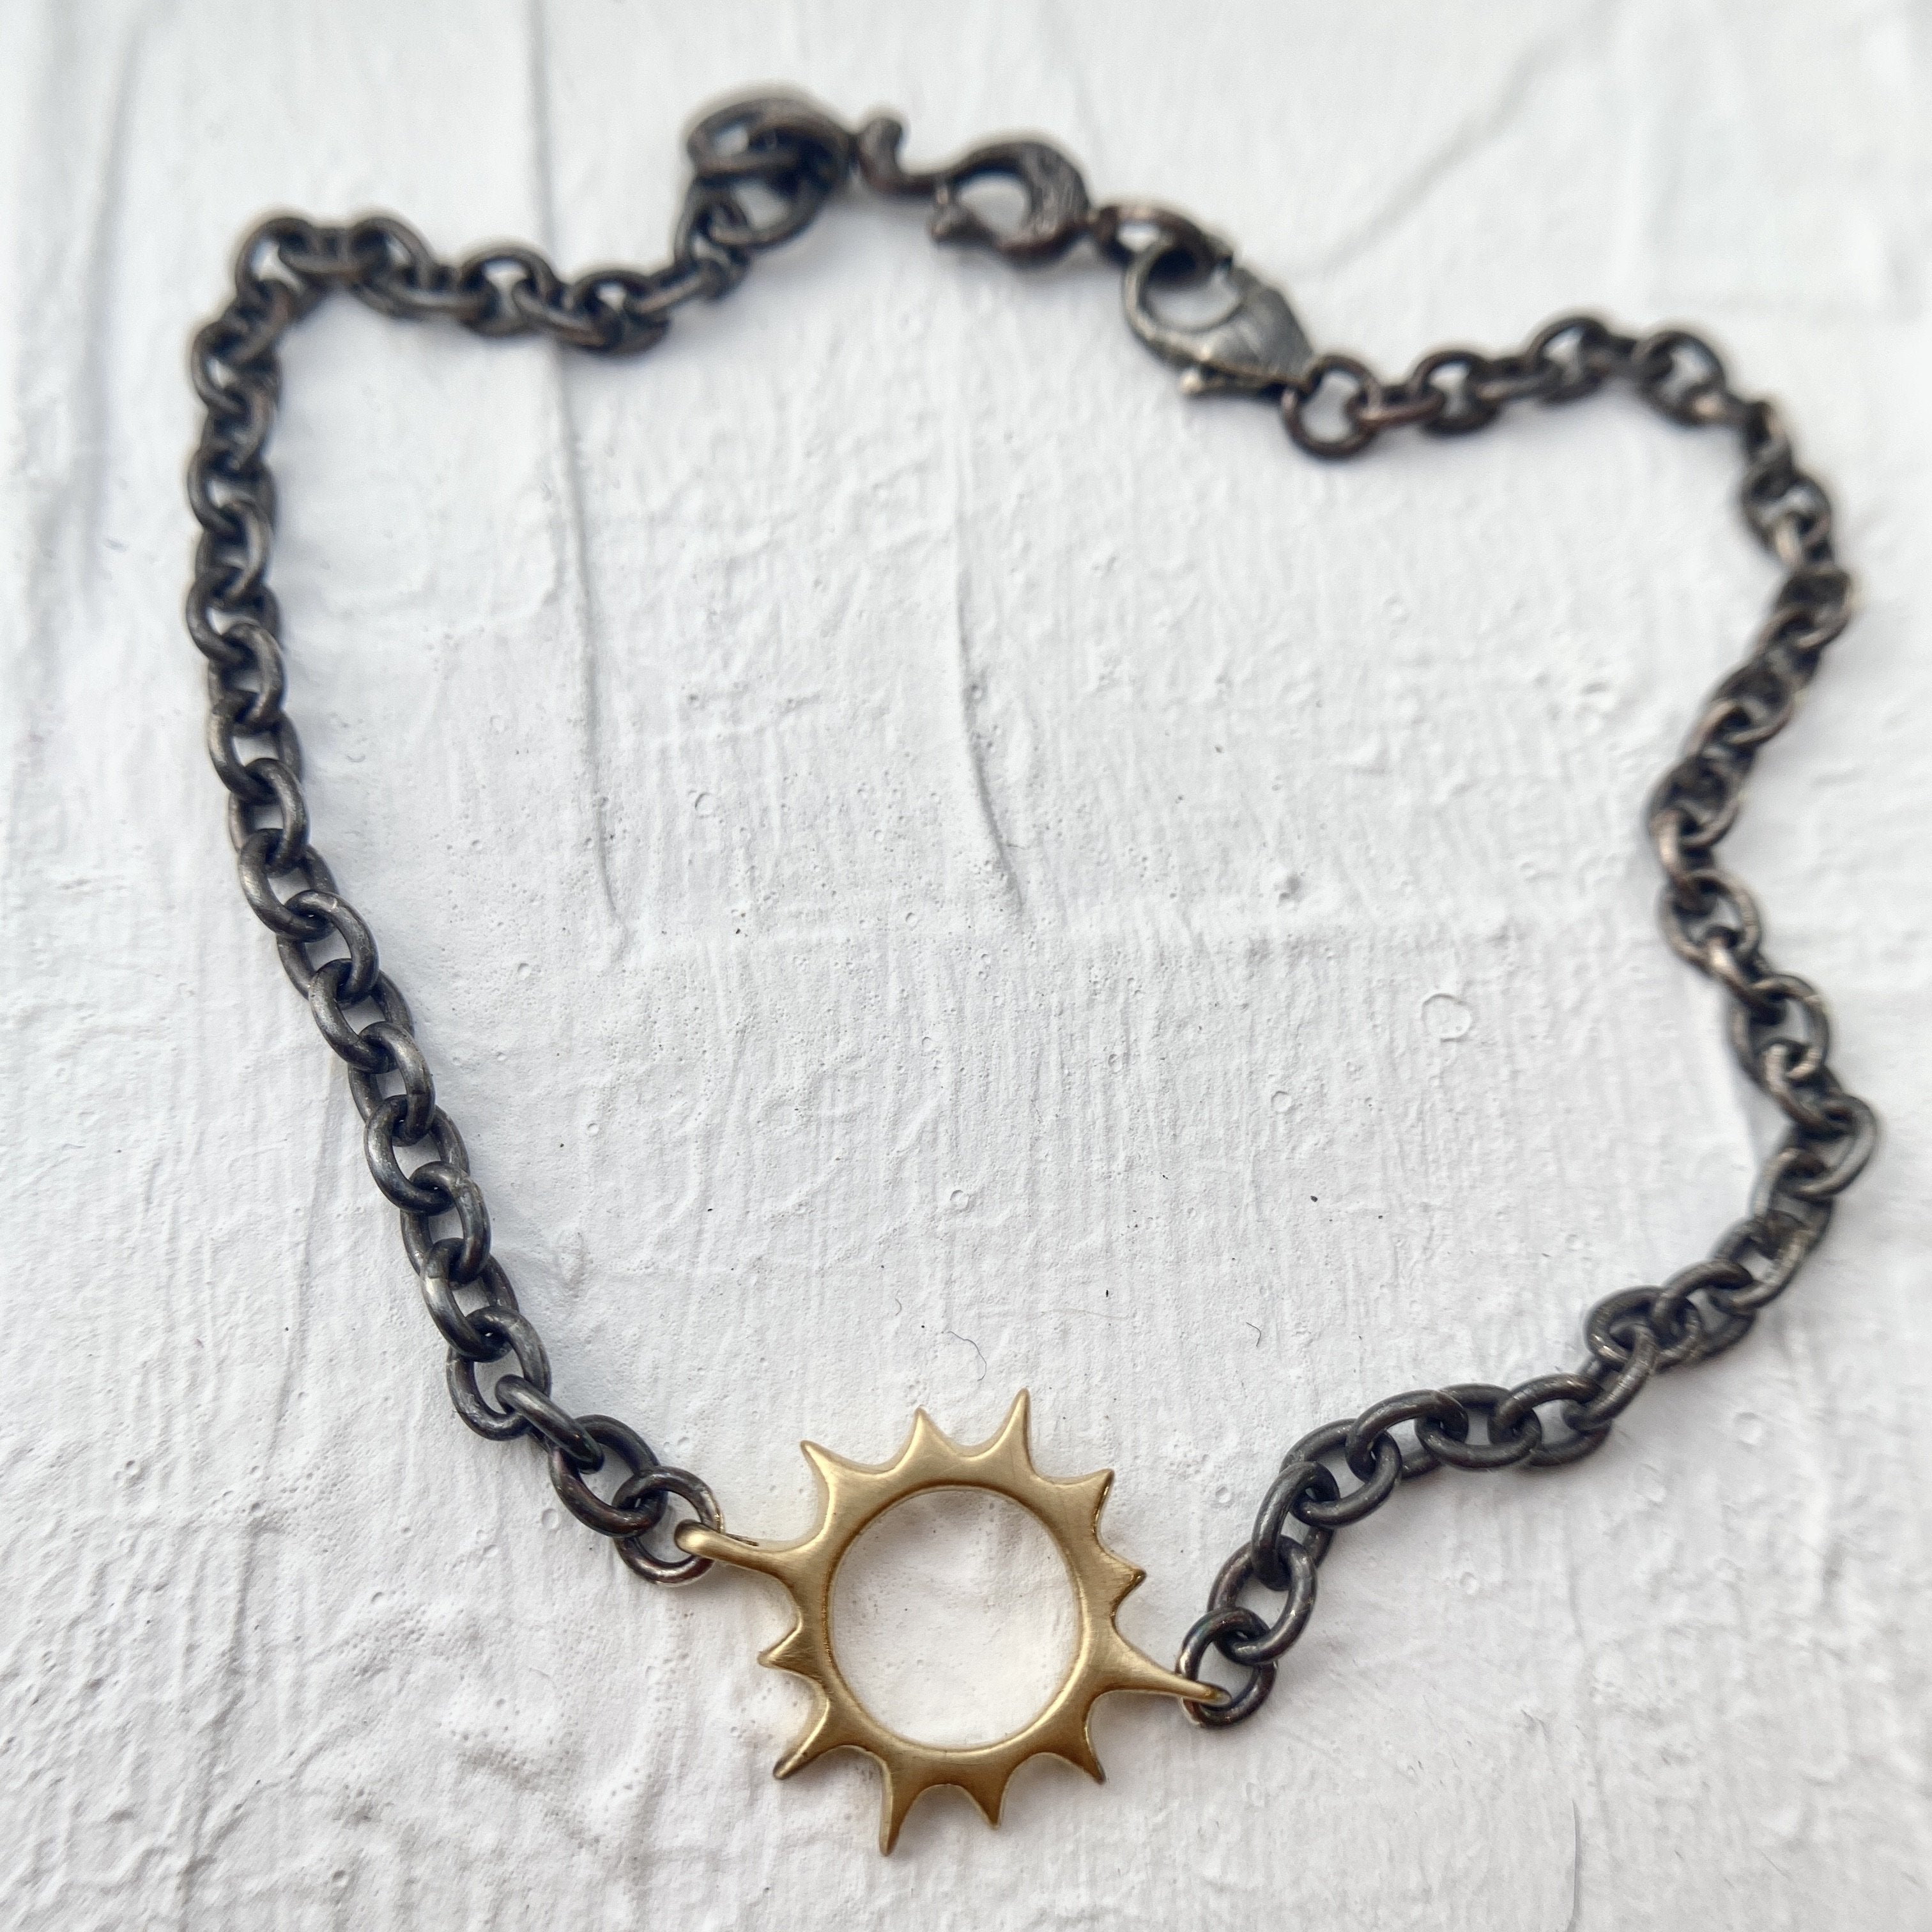 Large 18k Golden Sun on Oxidized Silver Chain Bracelet